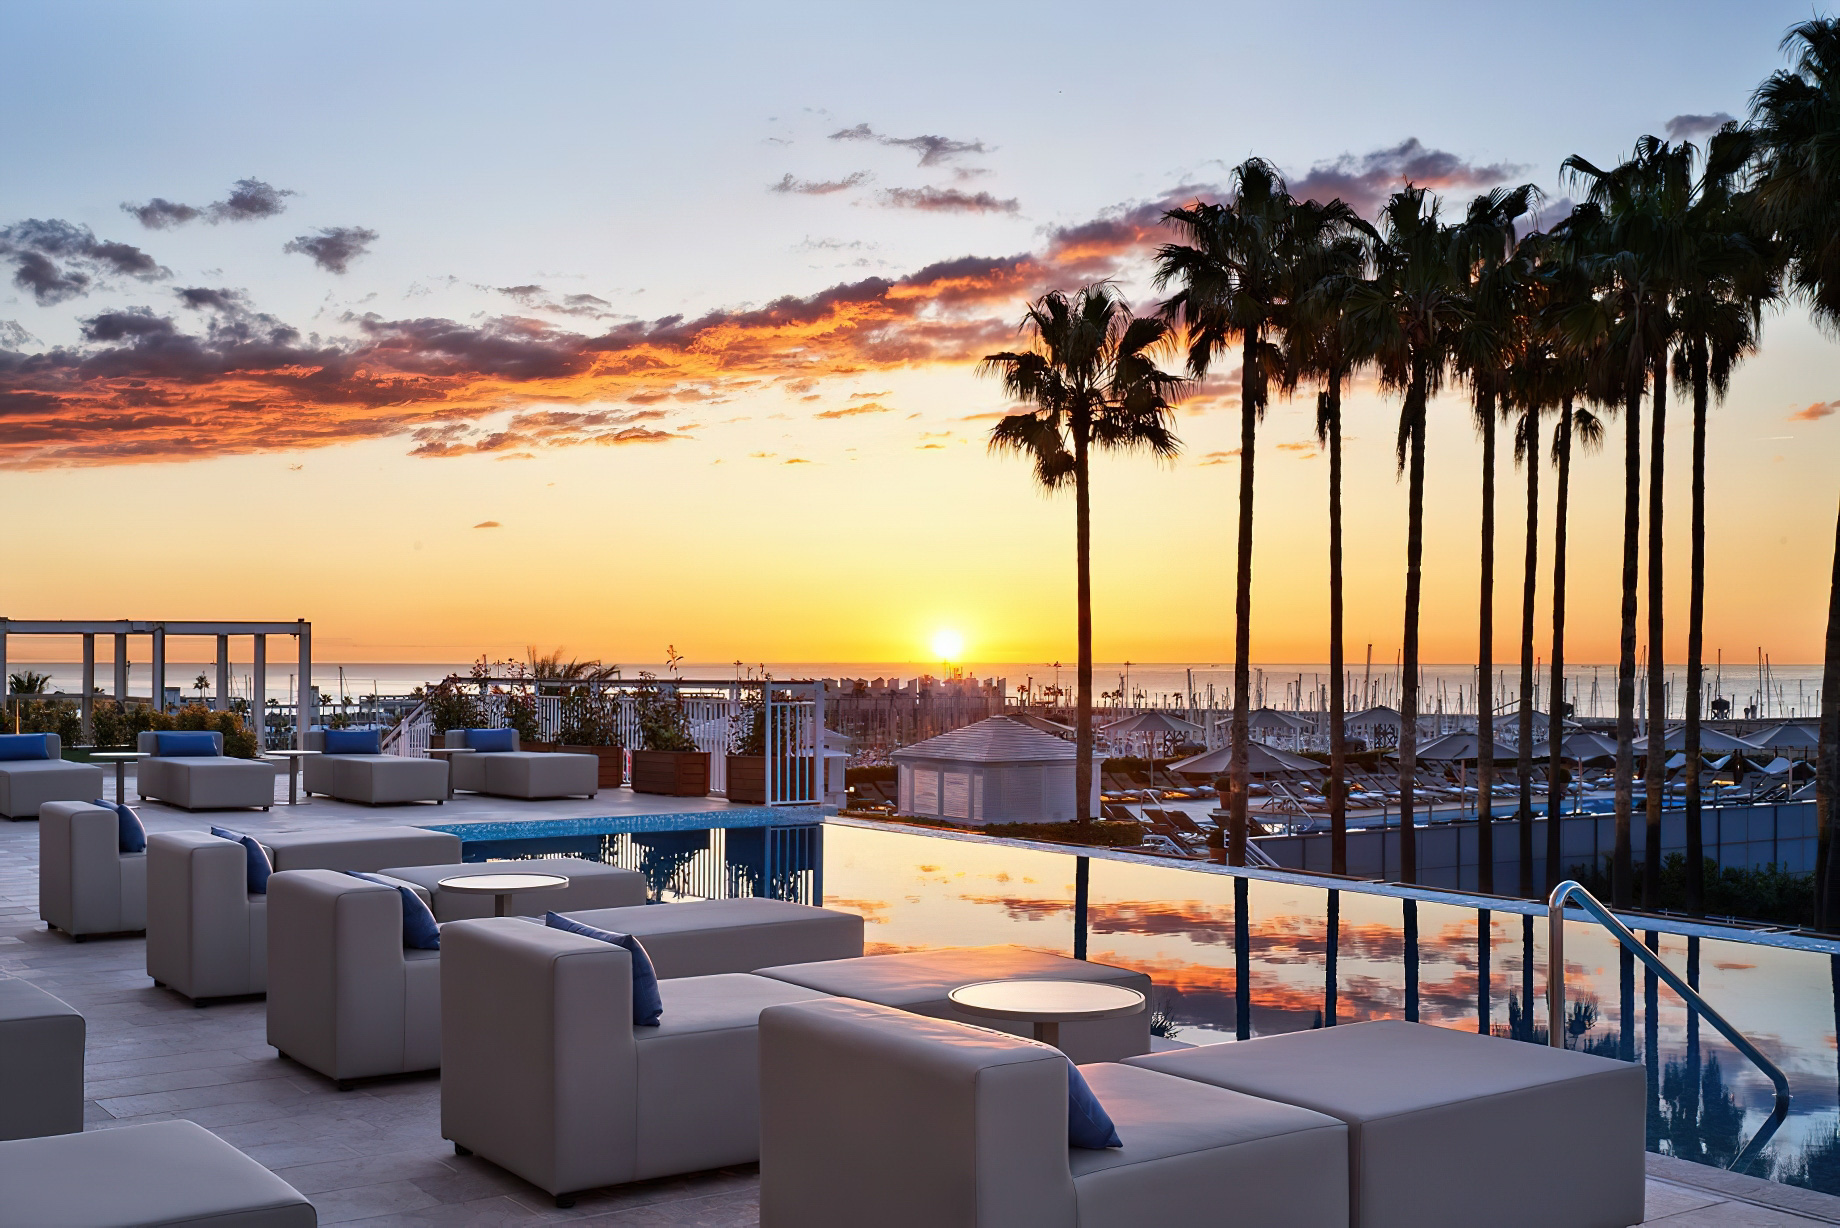 Hotel Arts Barcelona Ritz-Carlton – Barcelona, Spain – Infinity Pool Lounge Sunset